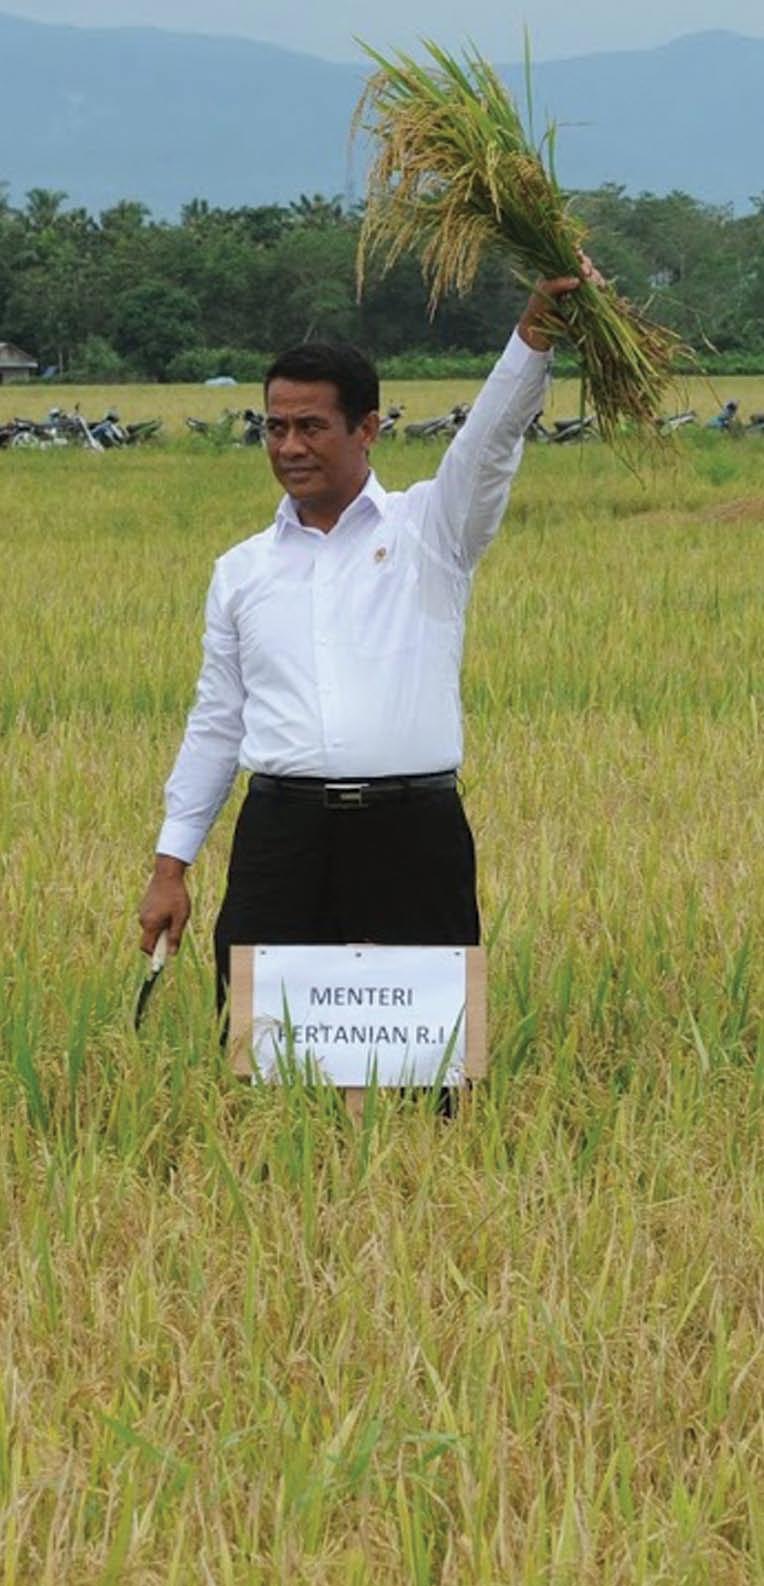 POSISI PADI INDONESIA DI DUNIA Agustus 2016, Badan Litbang Pertanian memasuki usia 42 tahun. Selama kurun waktu itu, benih unggul padi merupakan salah satu karya teknologi andalan.